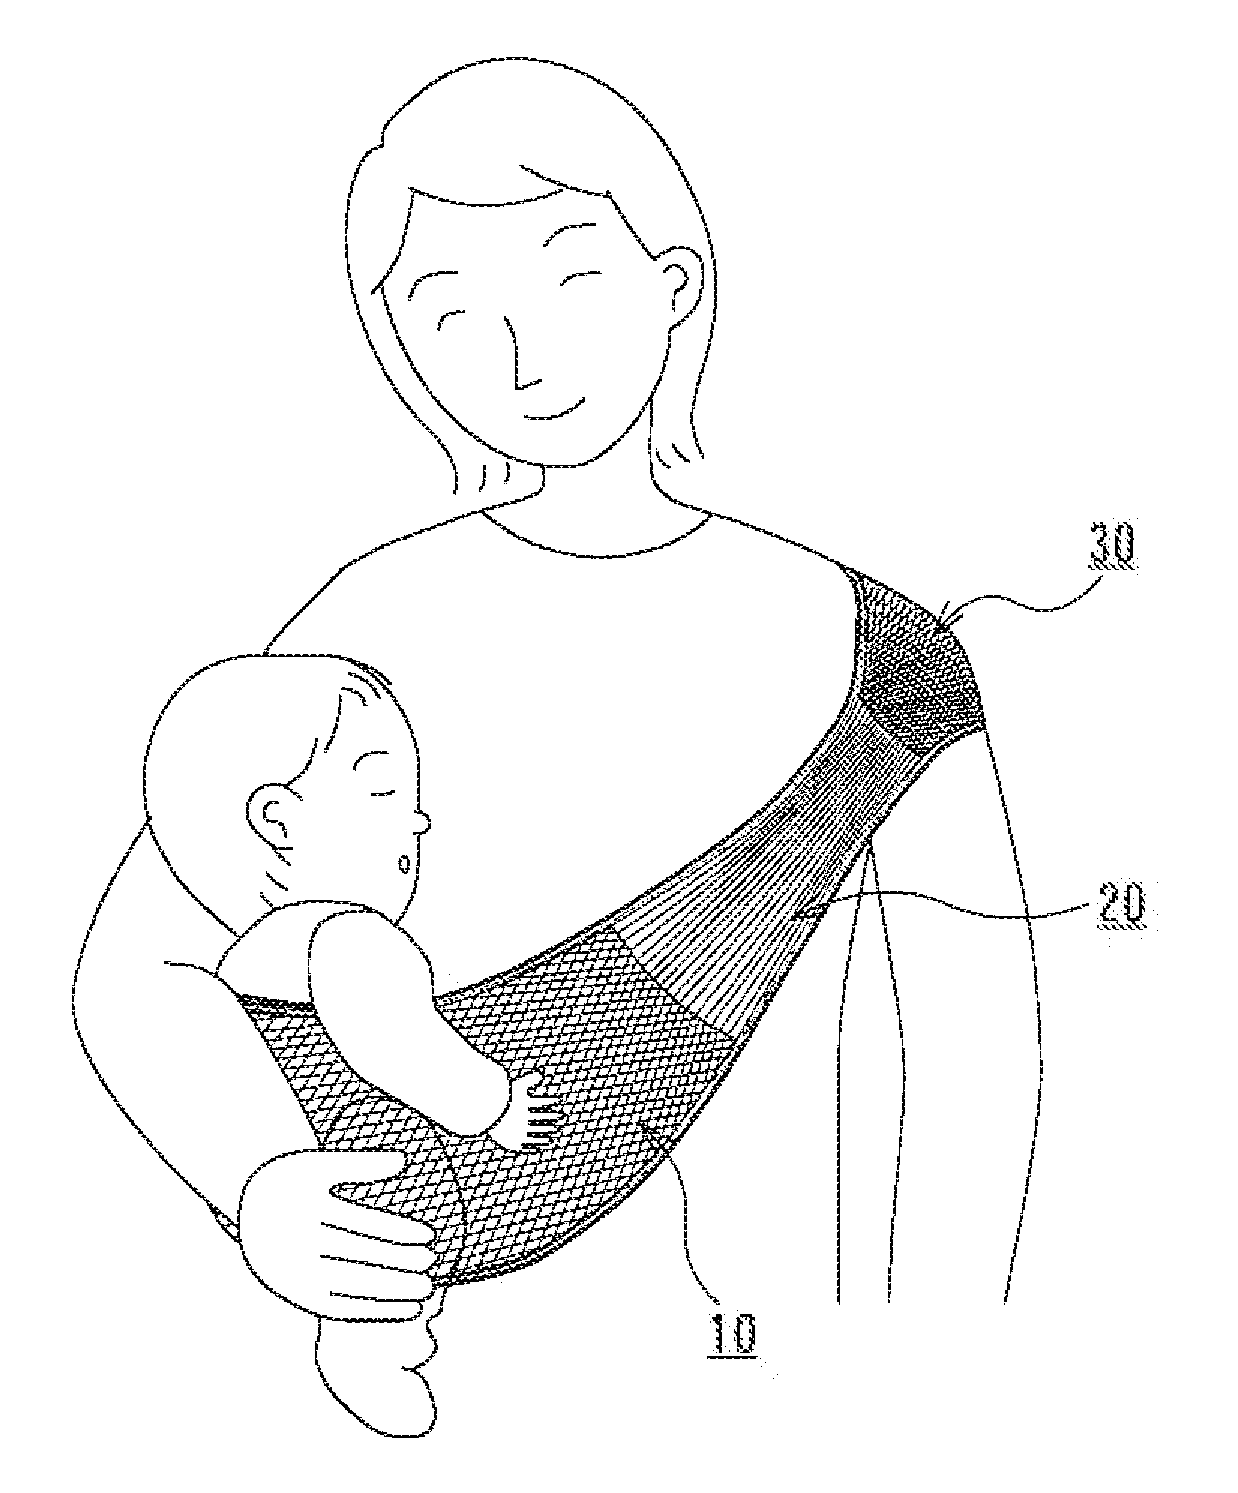 Baby sling